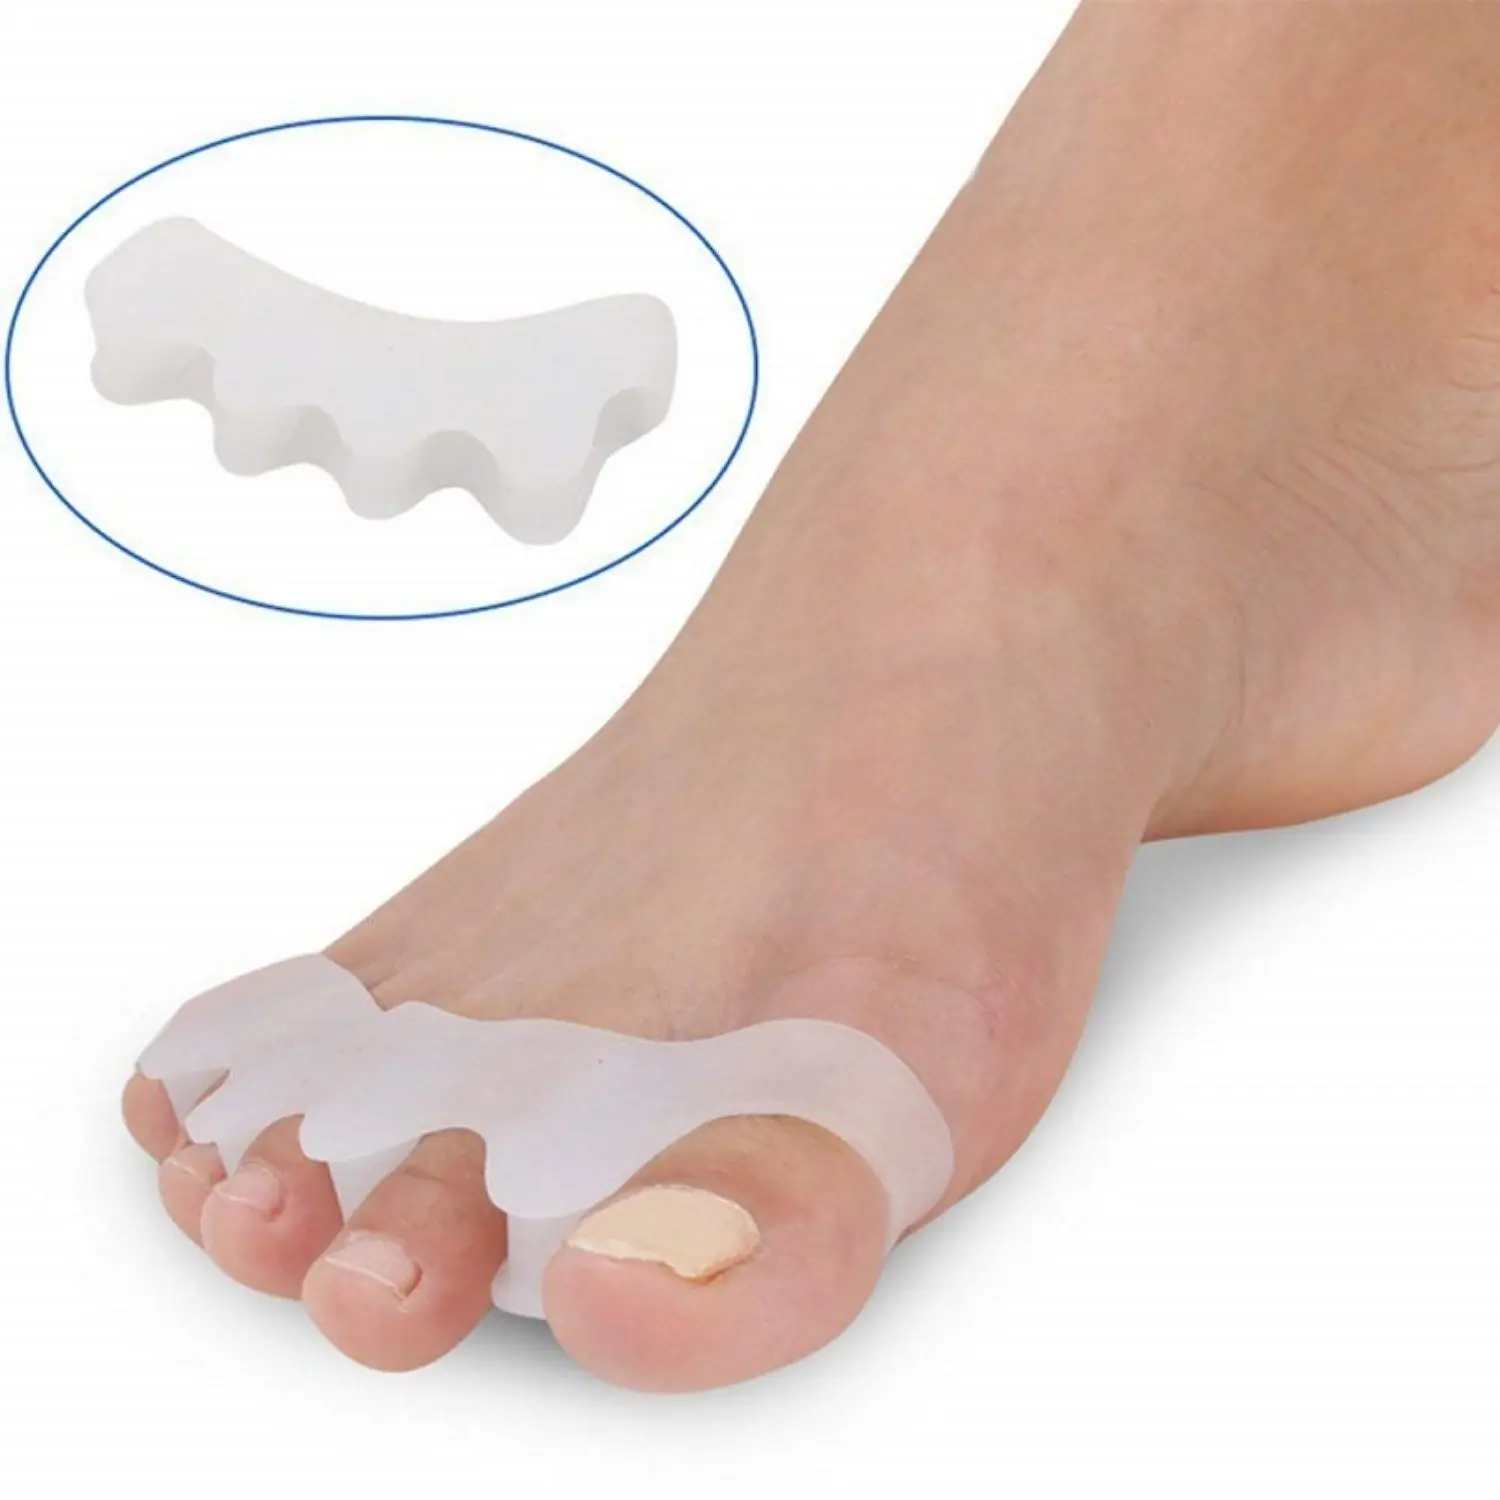 Bronson Professional Toe spacer, toe separator, hammer toe corrector, toe straightener – free size – 1 pair